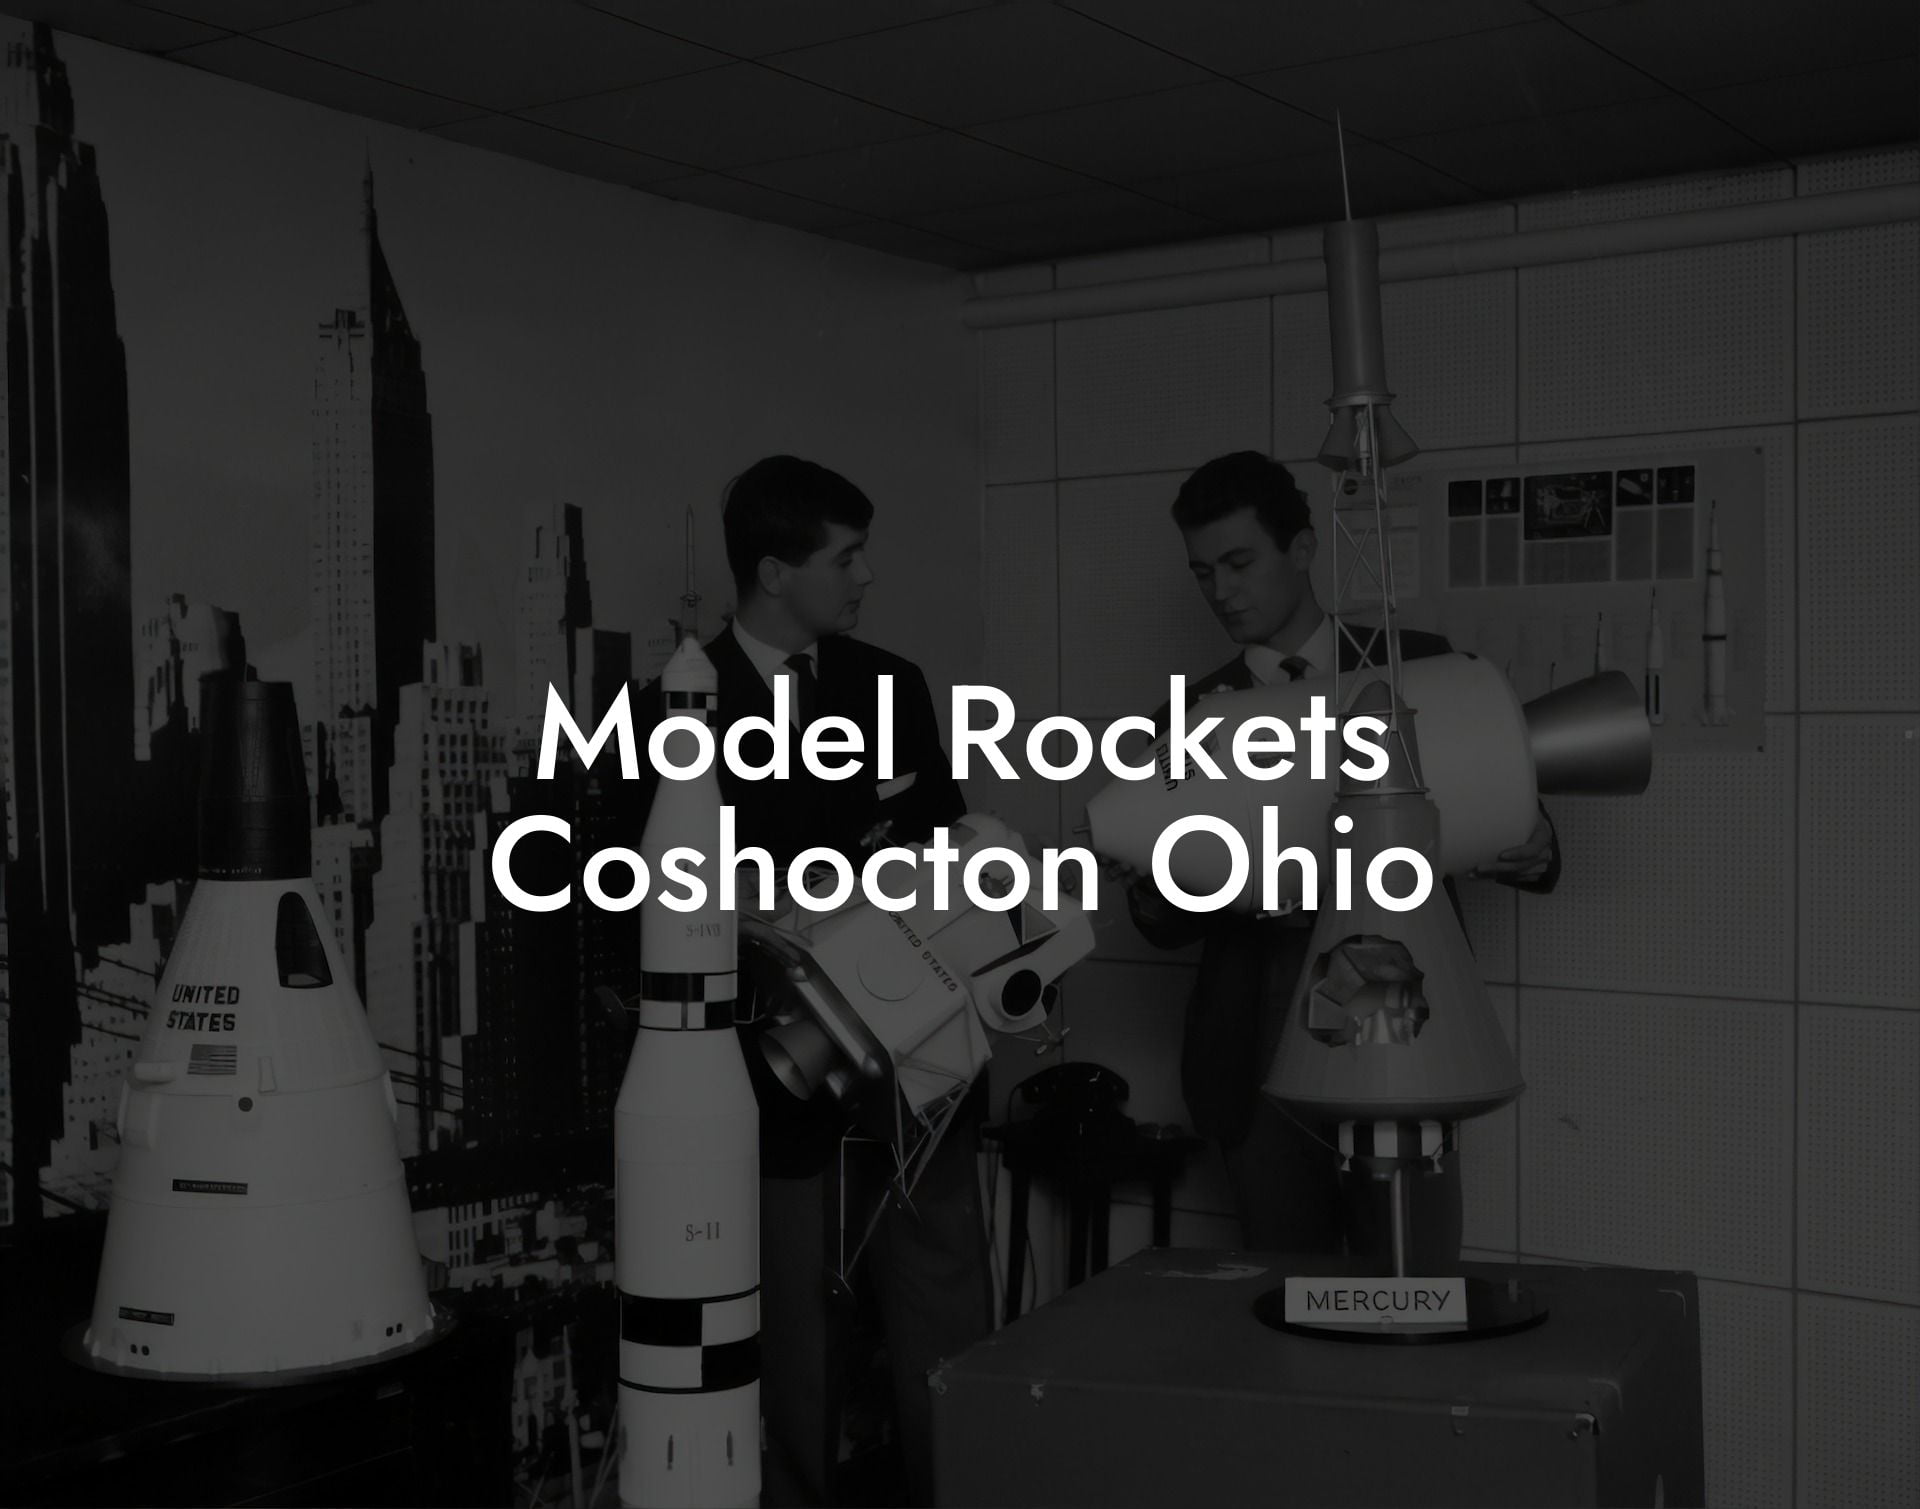 Model Rockets Coshocton Ohio